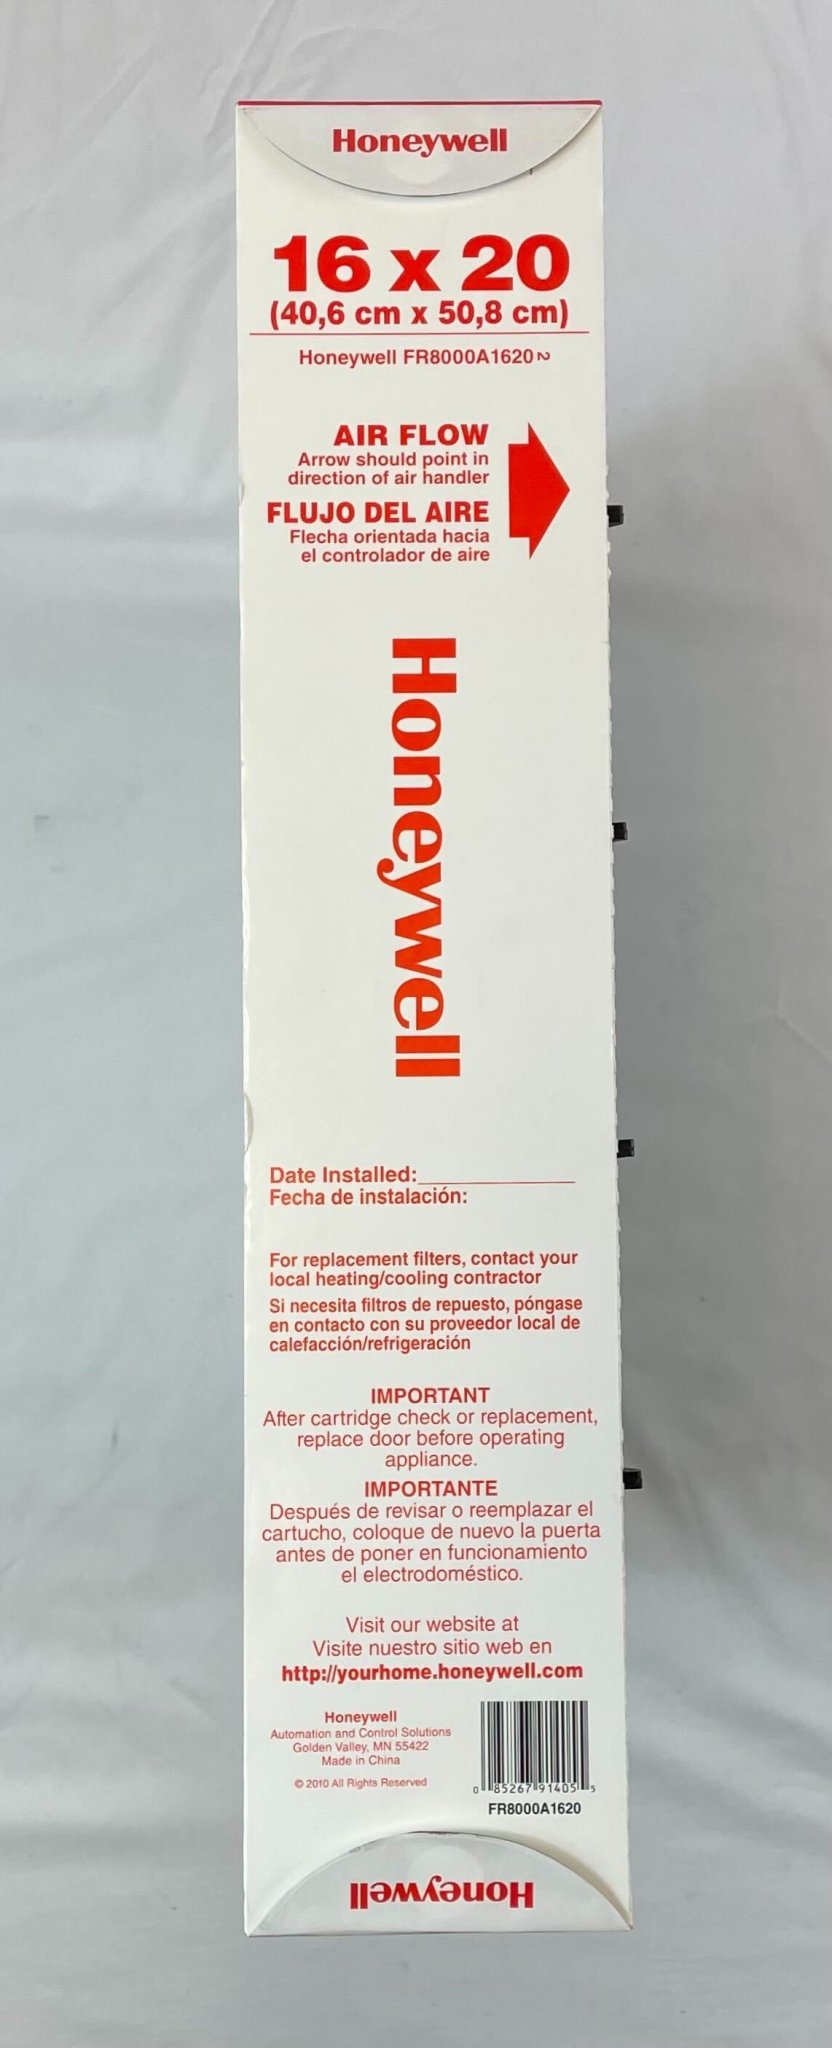 Honeywell FR8000A1620 Replacement Filter - The Fire Alarm Supplier